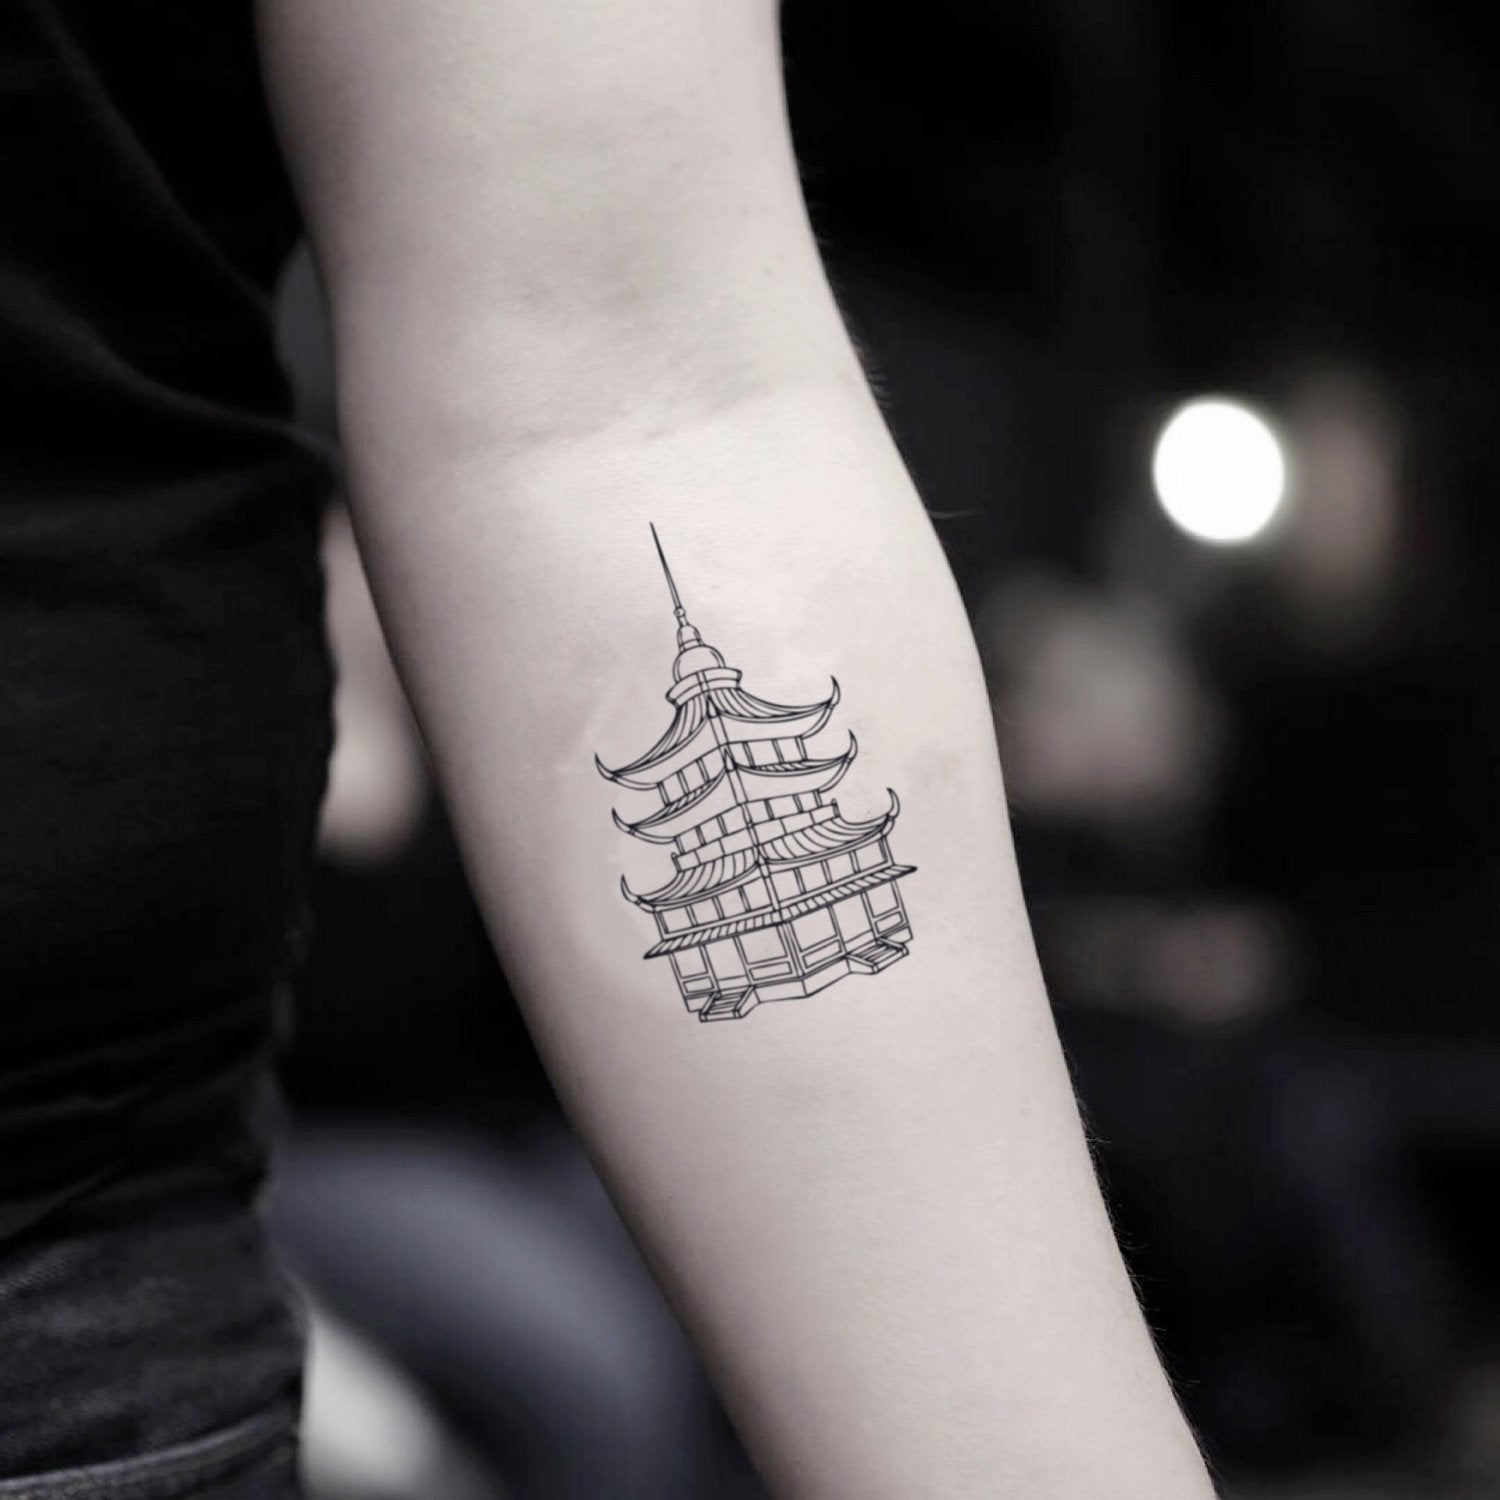 fake small pagoda illustrative temporary tattoo sticker design idea on inner arm